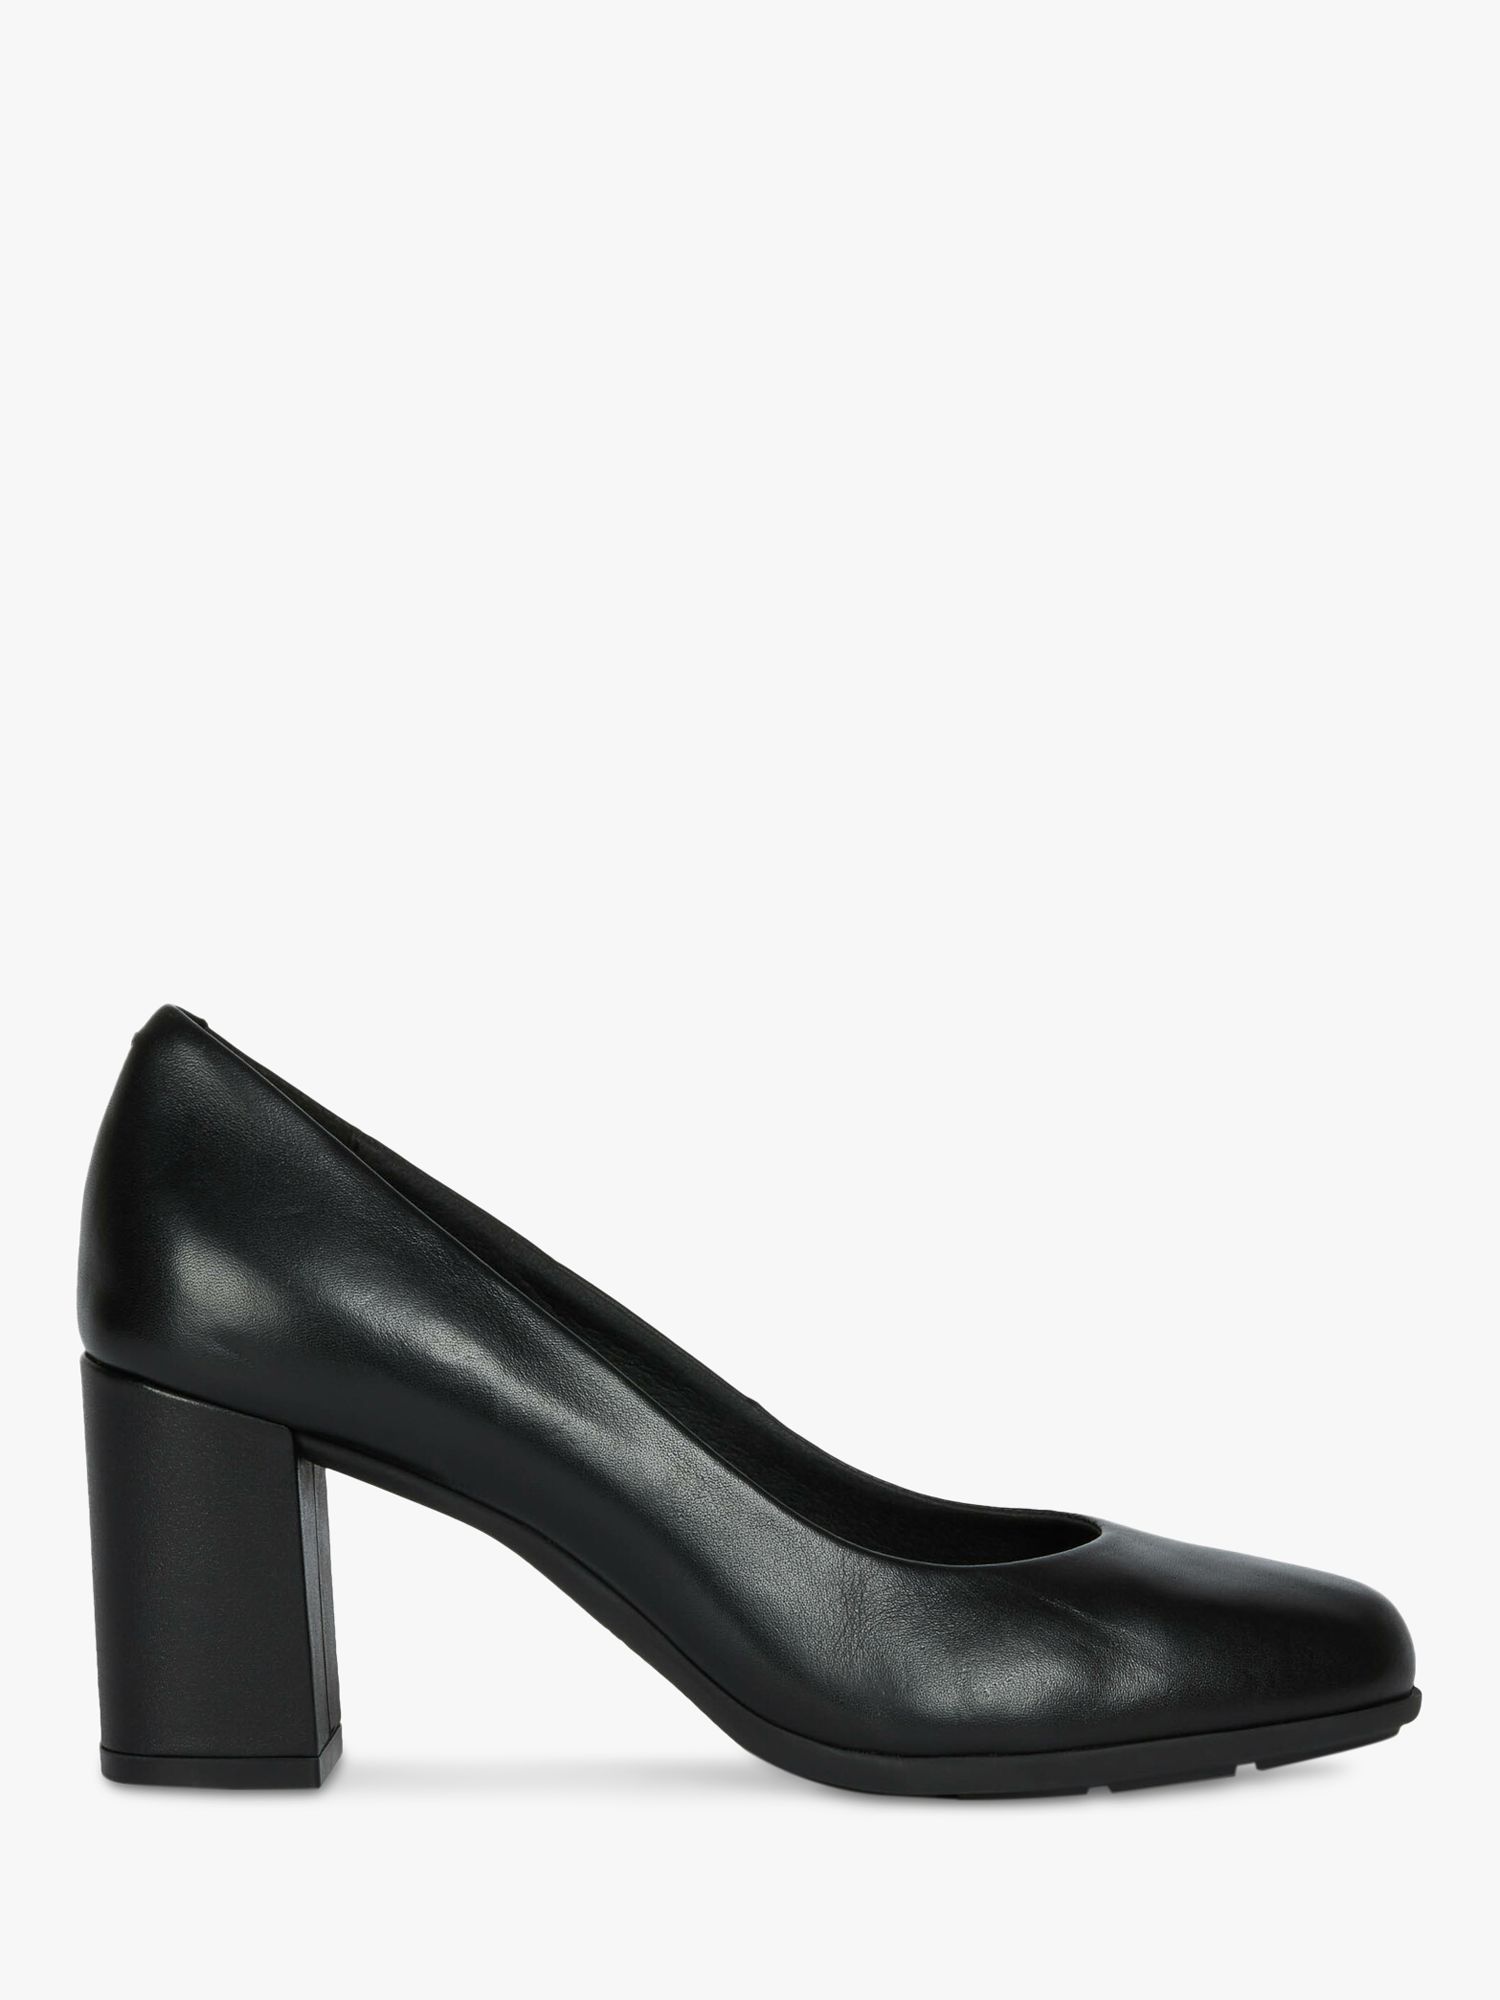 Geox Women's Annya Leather Heel Court Shoes, Black, 3